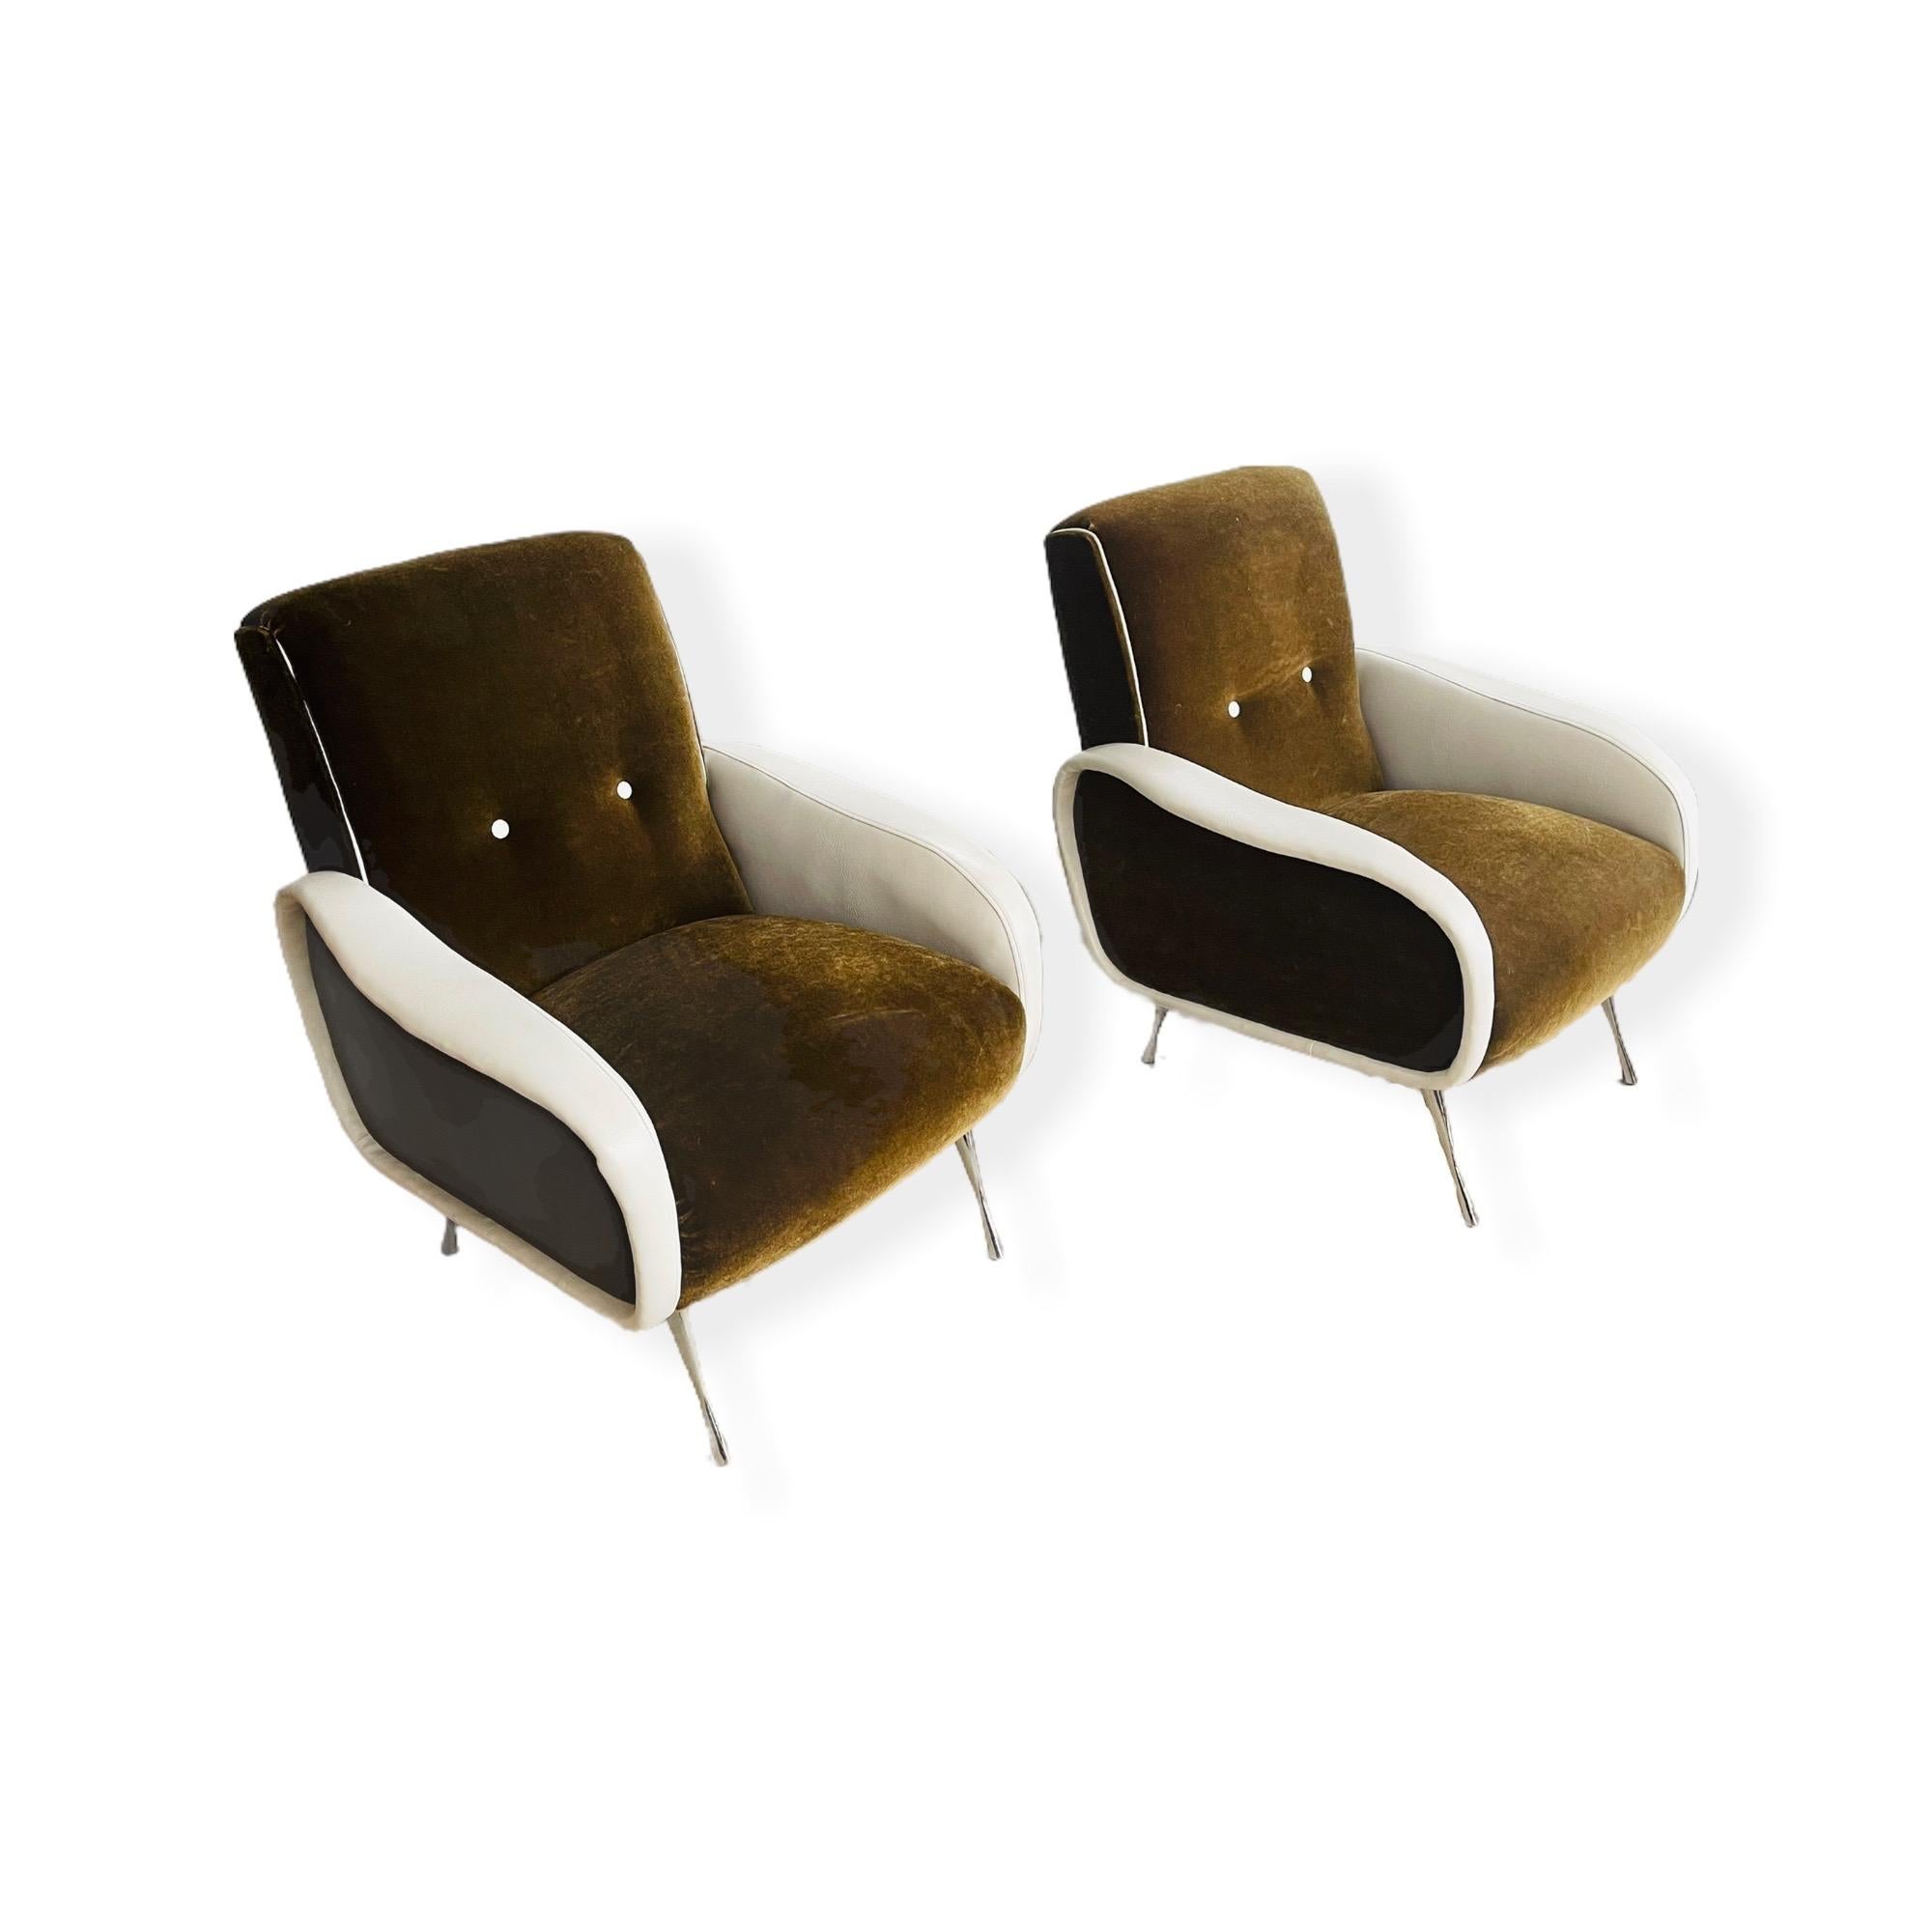 Marco Zanuso Style Italian Modern Lounge Chair 1